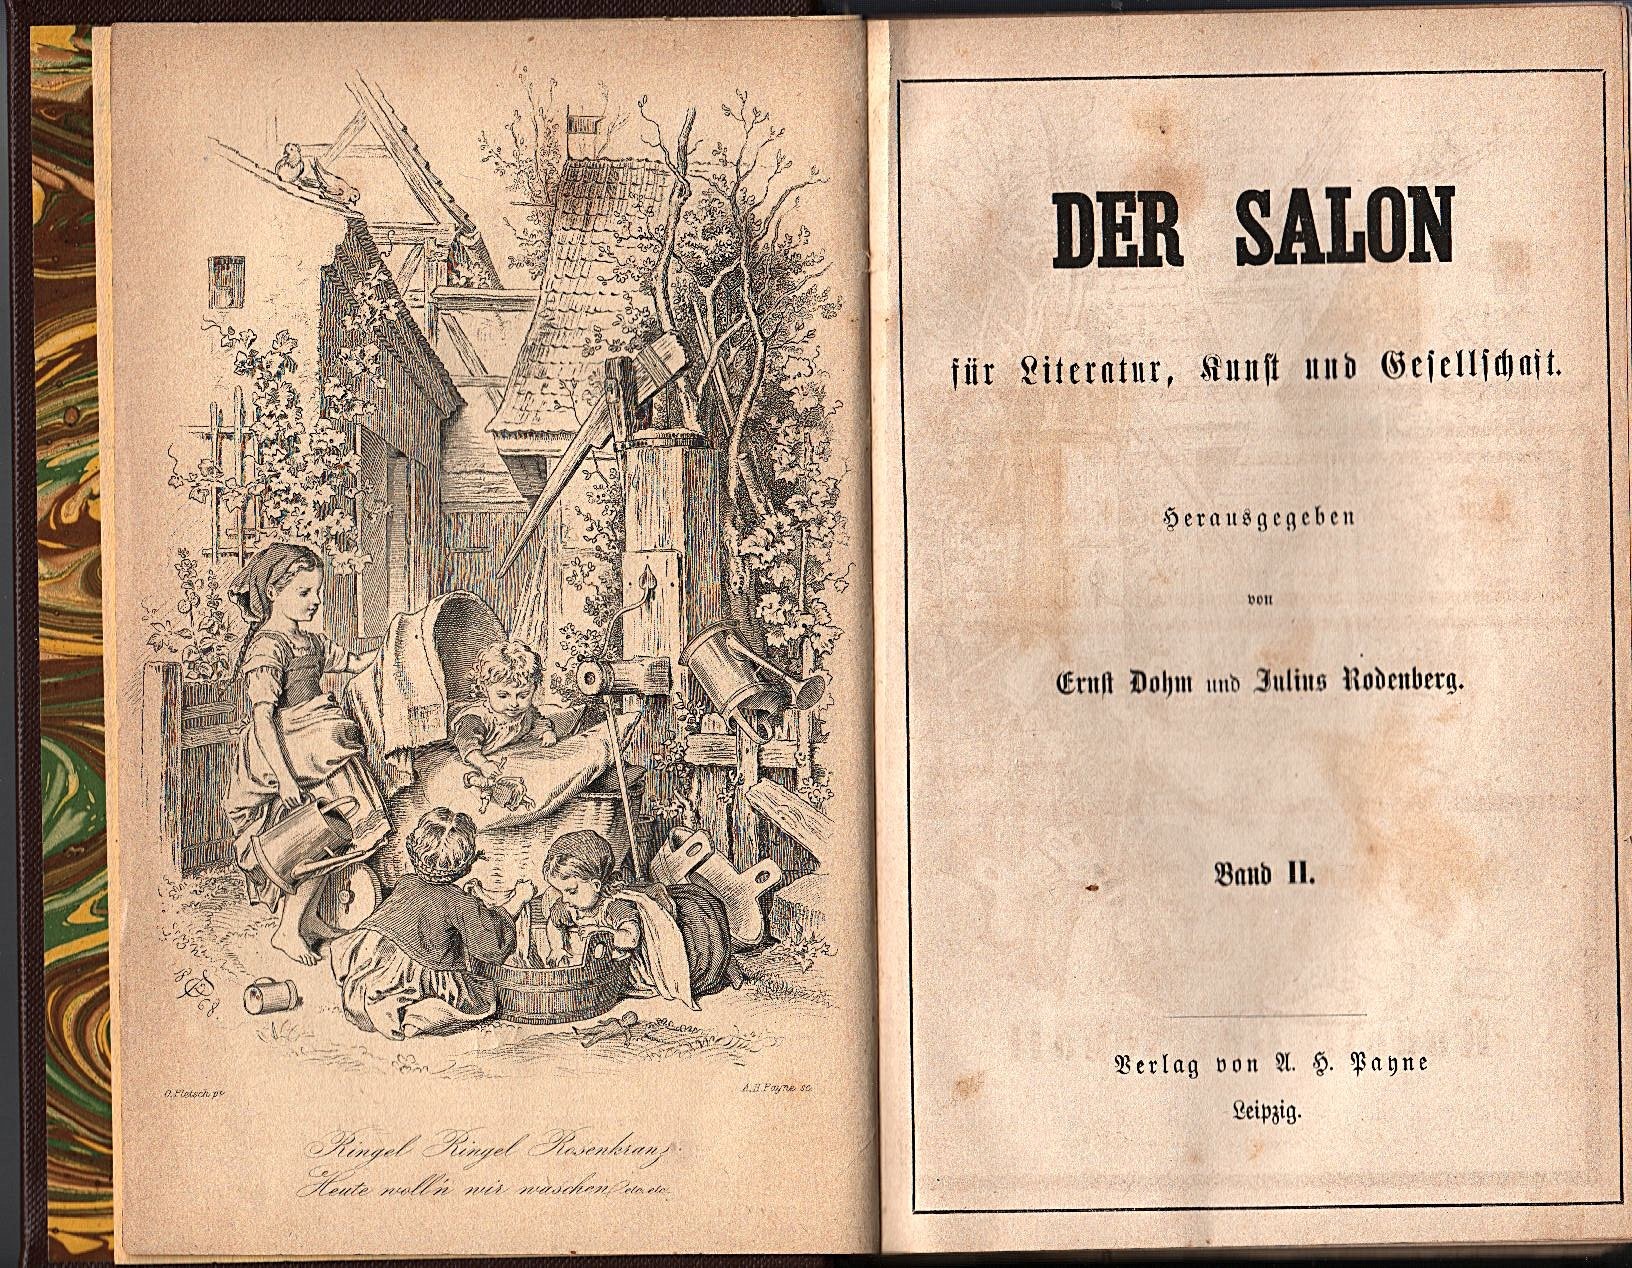 Der Salon (Museumslandschaft Amt Rodenberg e.V. CC BY-NC-SA)